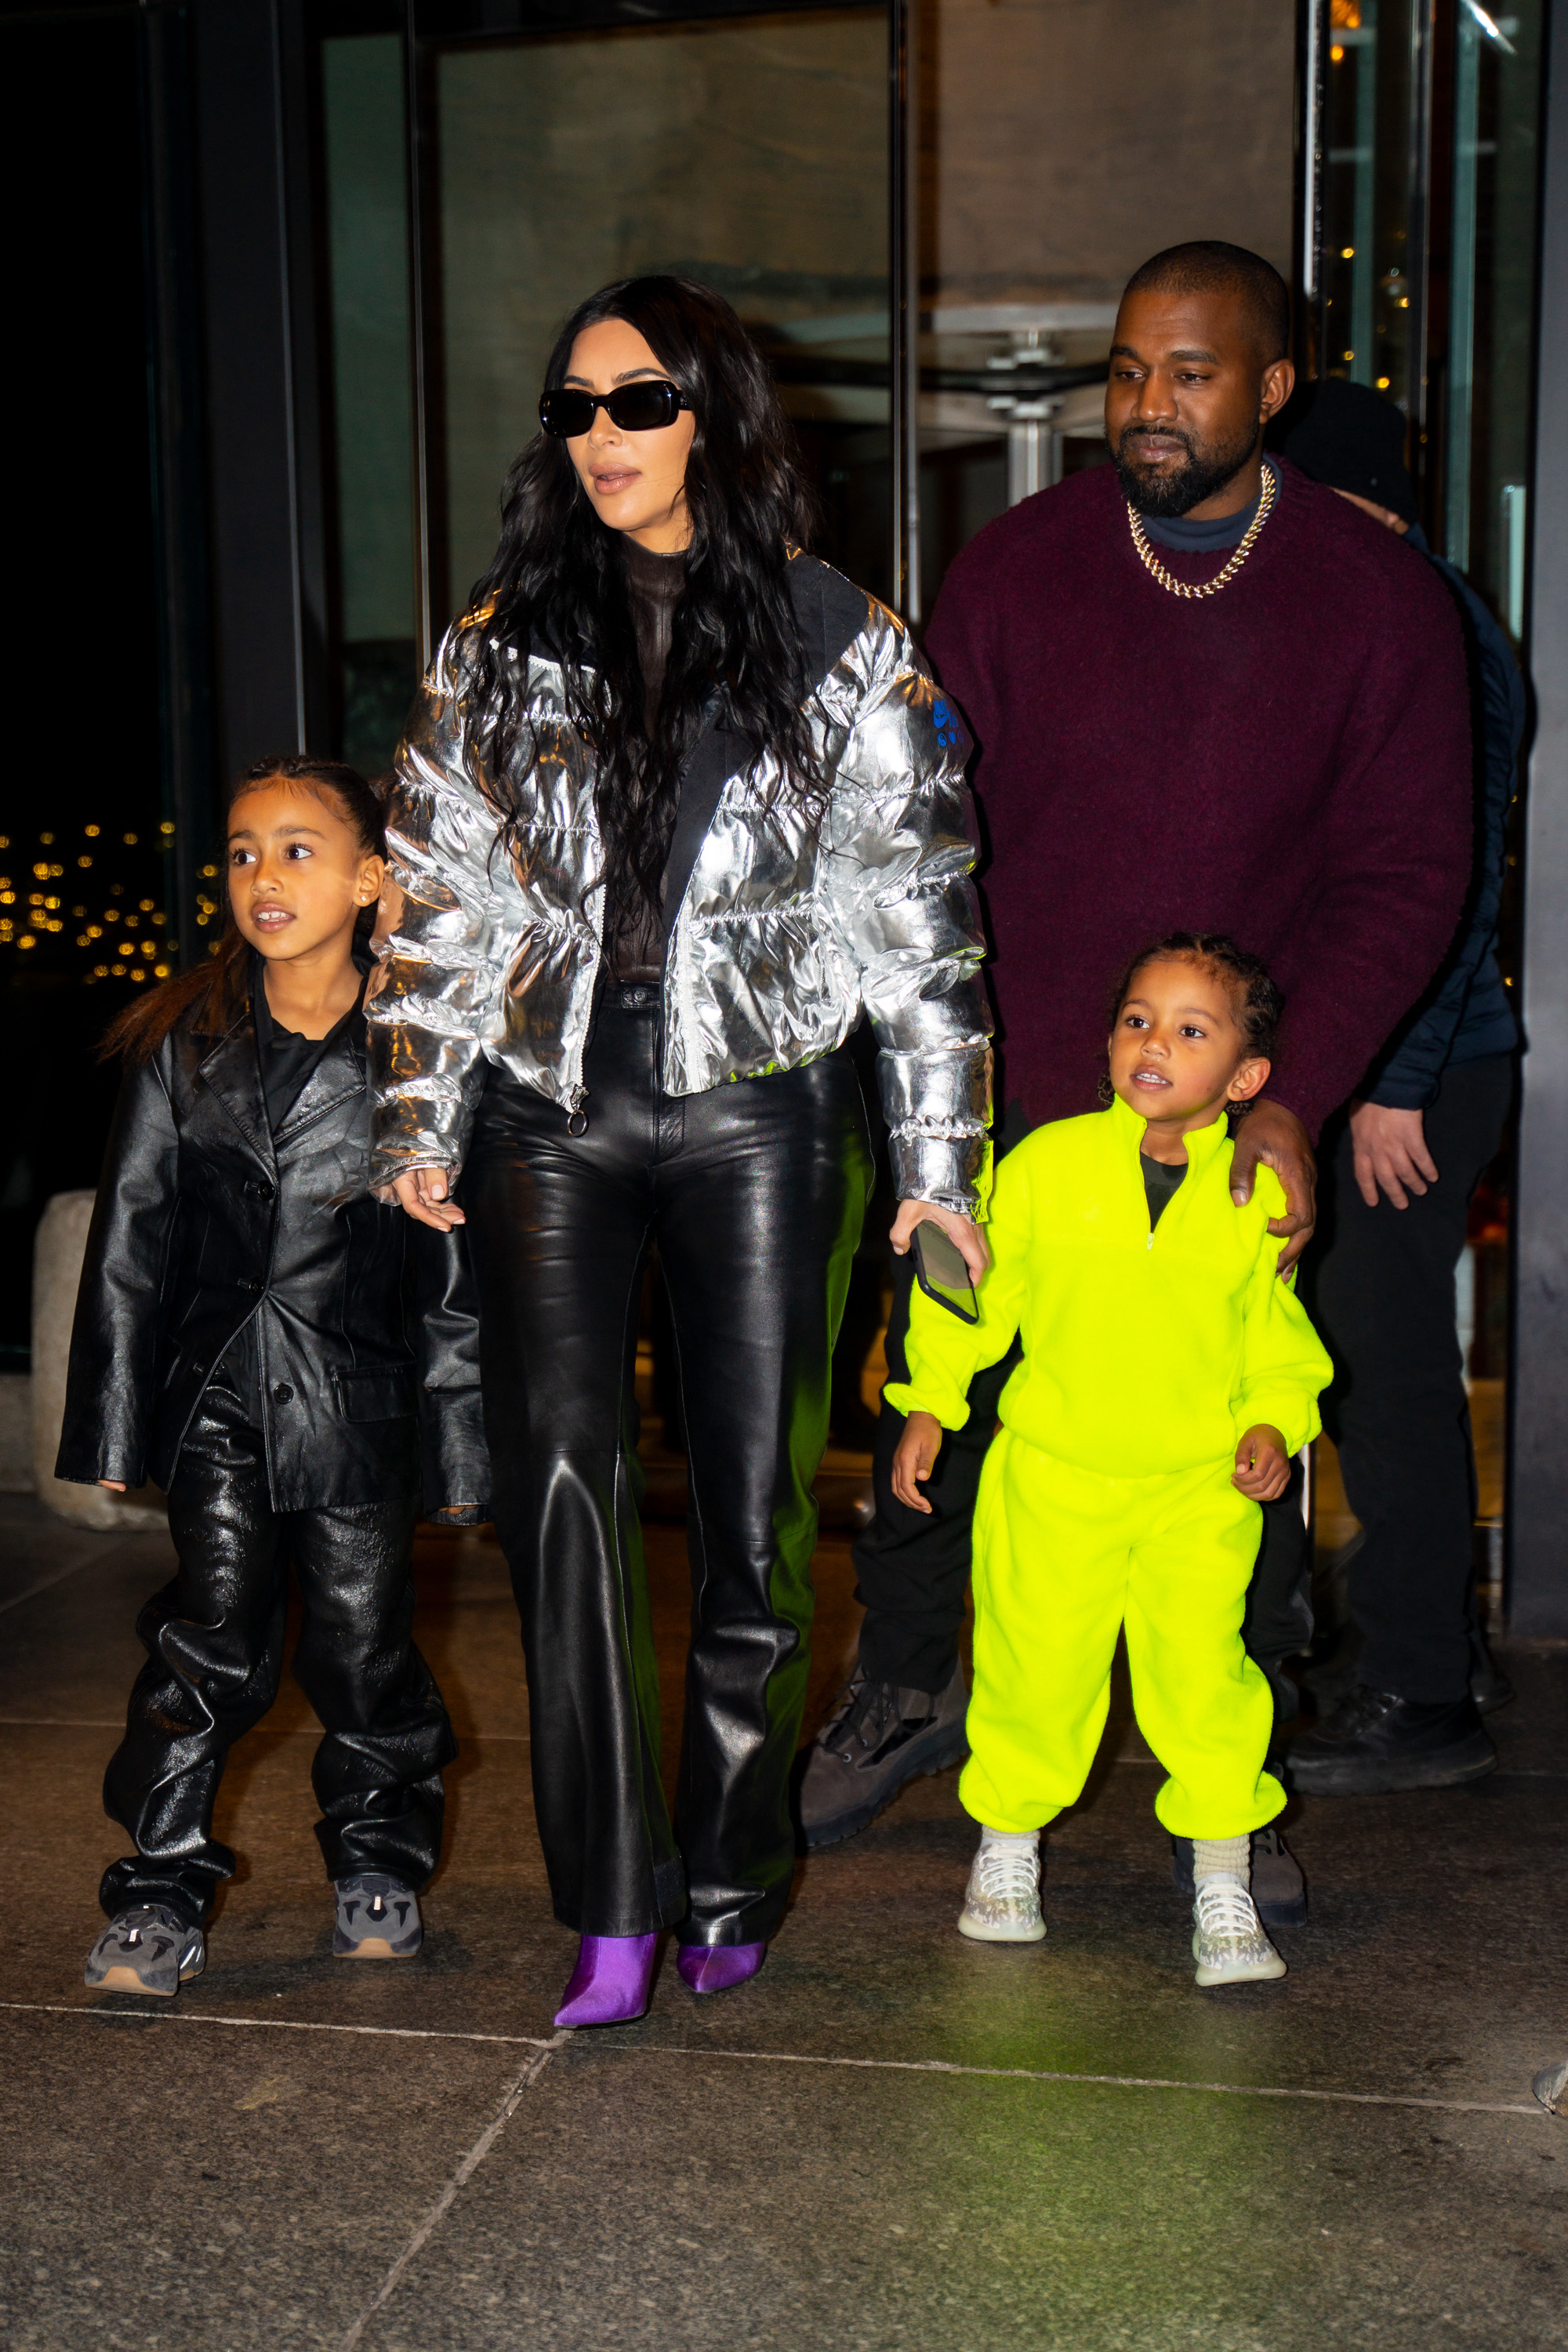 Kim Kardashian West, Kanye West, and their kids, North and Saint